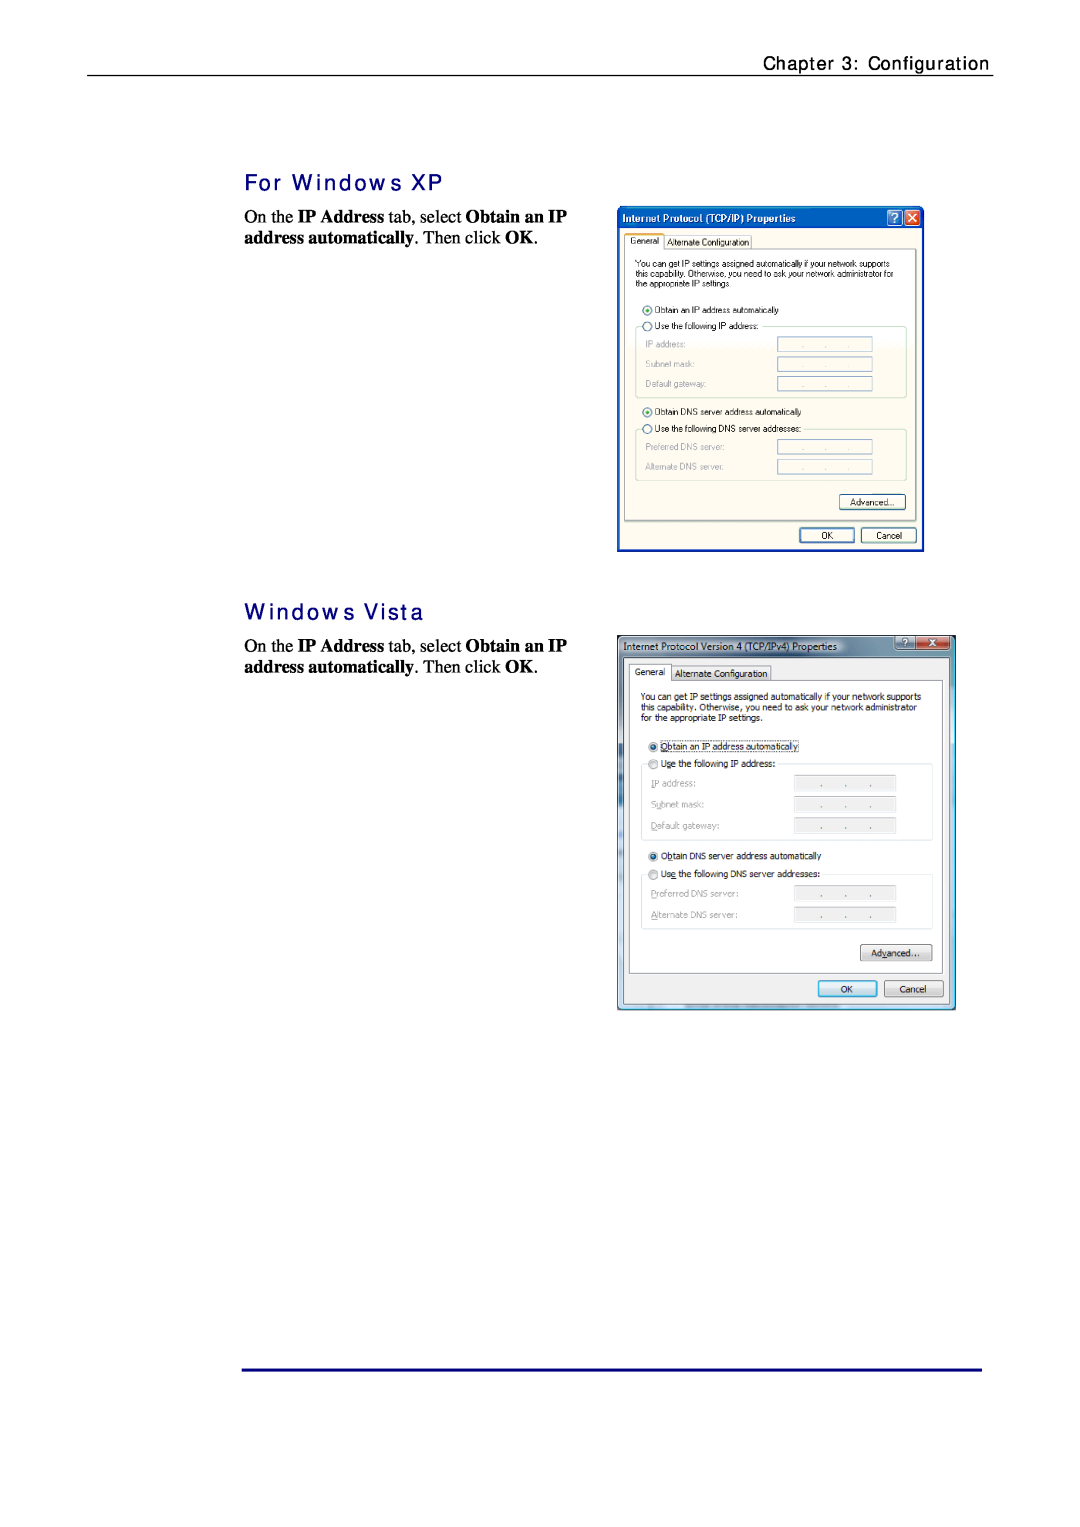 Siemens CL-010-I manual For Windows XP, Windows Vista, Configuration 